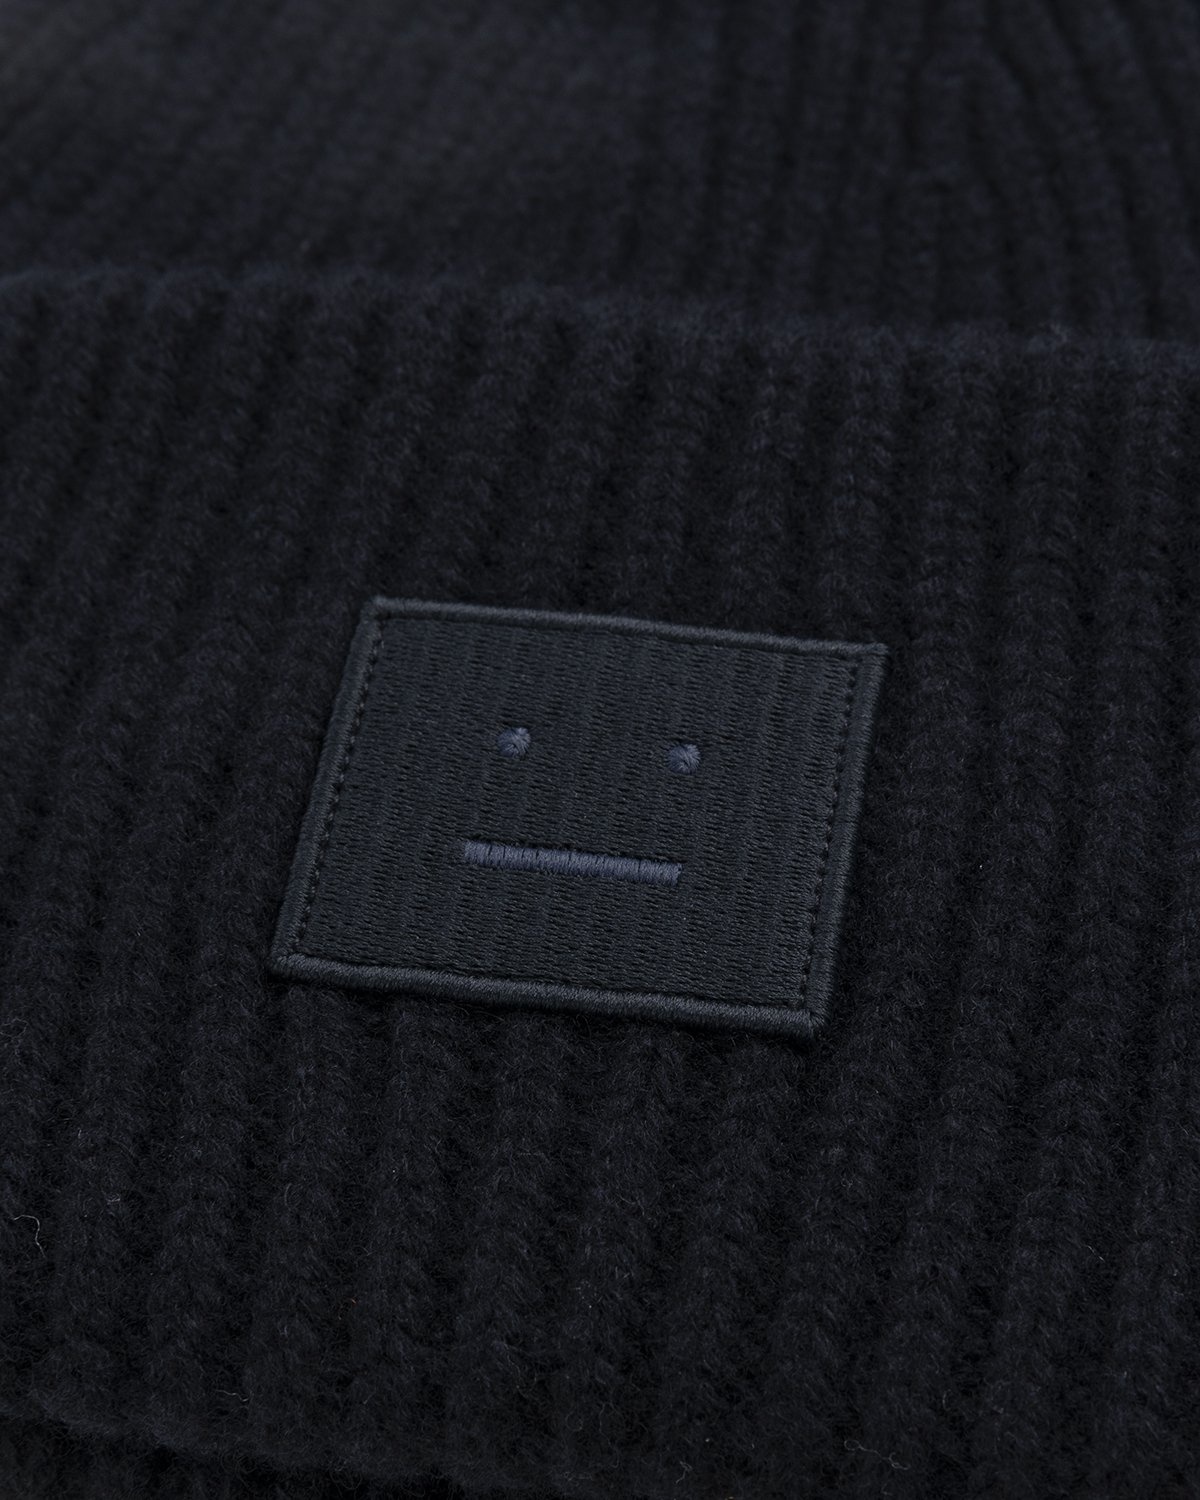 Acne Studios – Large Face Logo Beanie Black - Hats - Black - Image 3